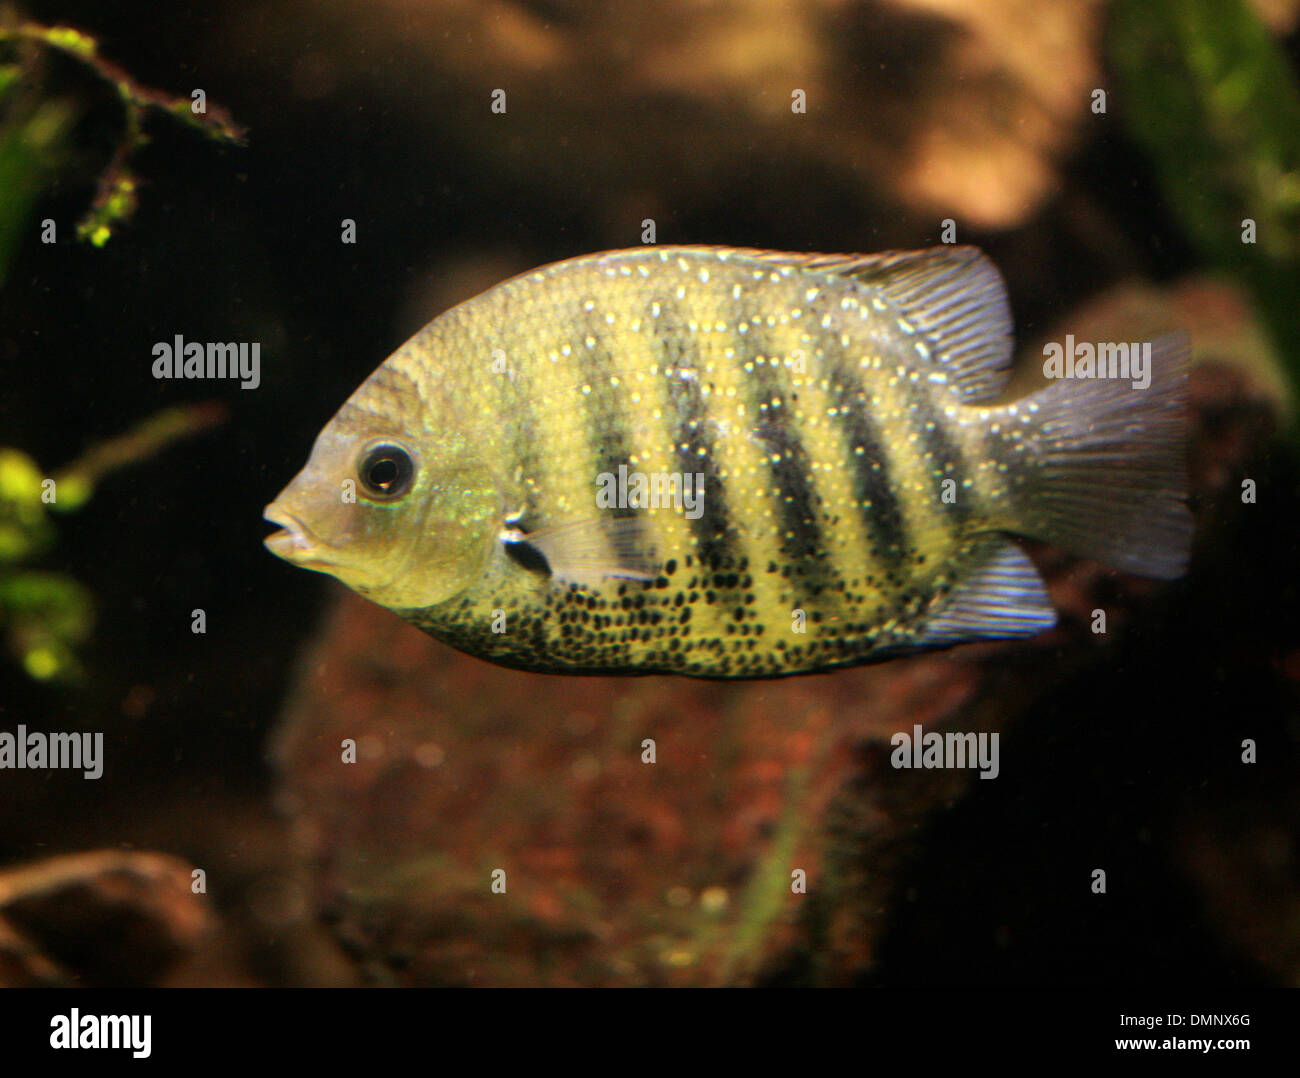 African Cichlid, Cichlidae, Perciformes, Chordata. Freshwater Fish from Lake Malawi. Stock Photo